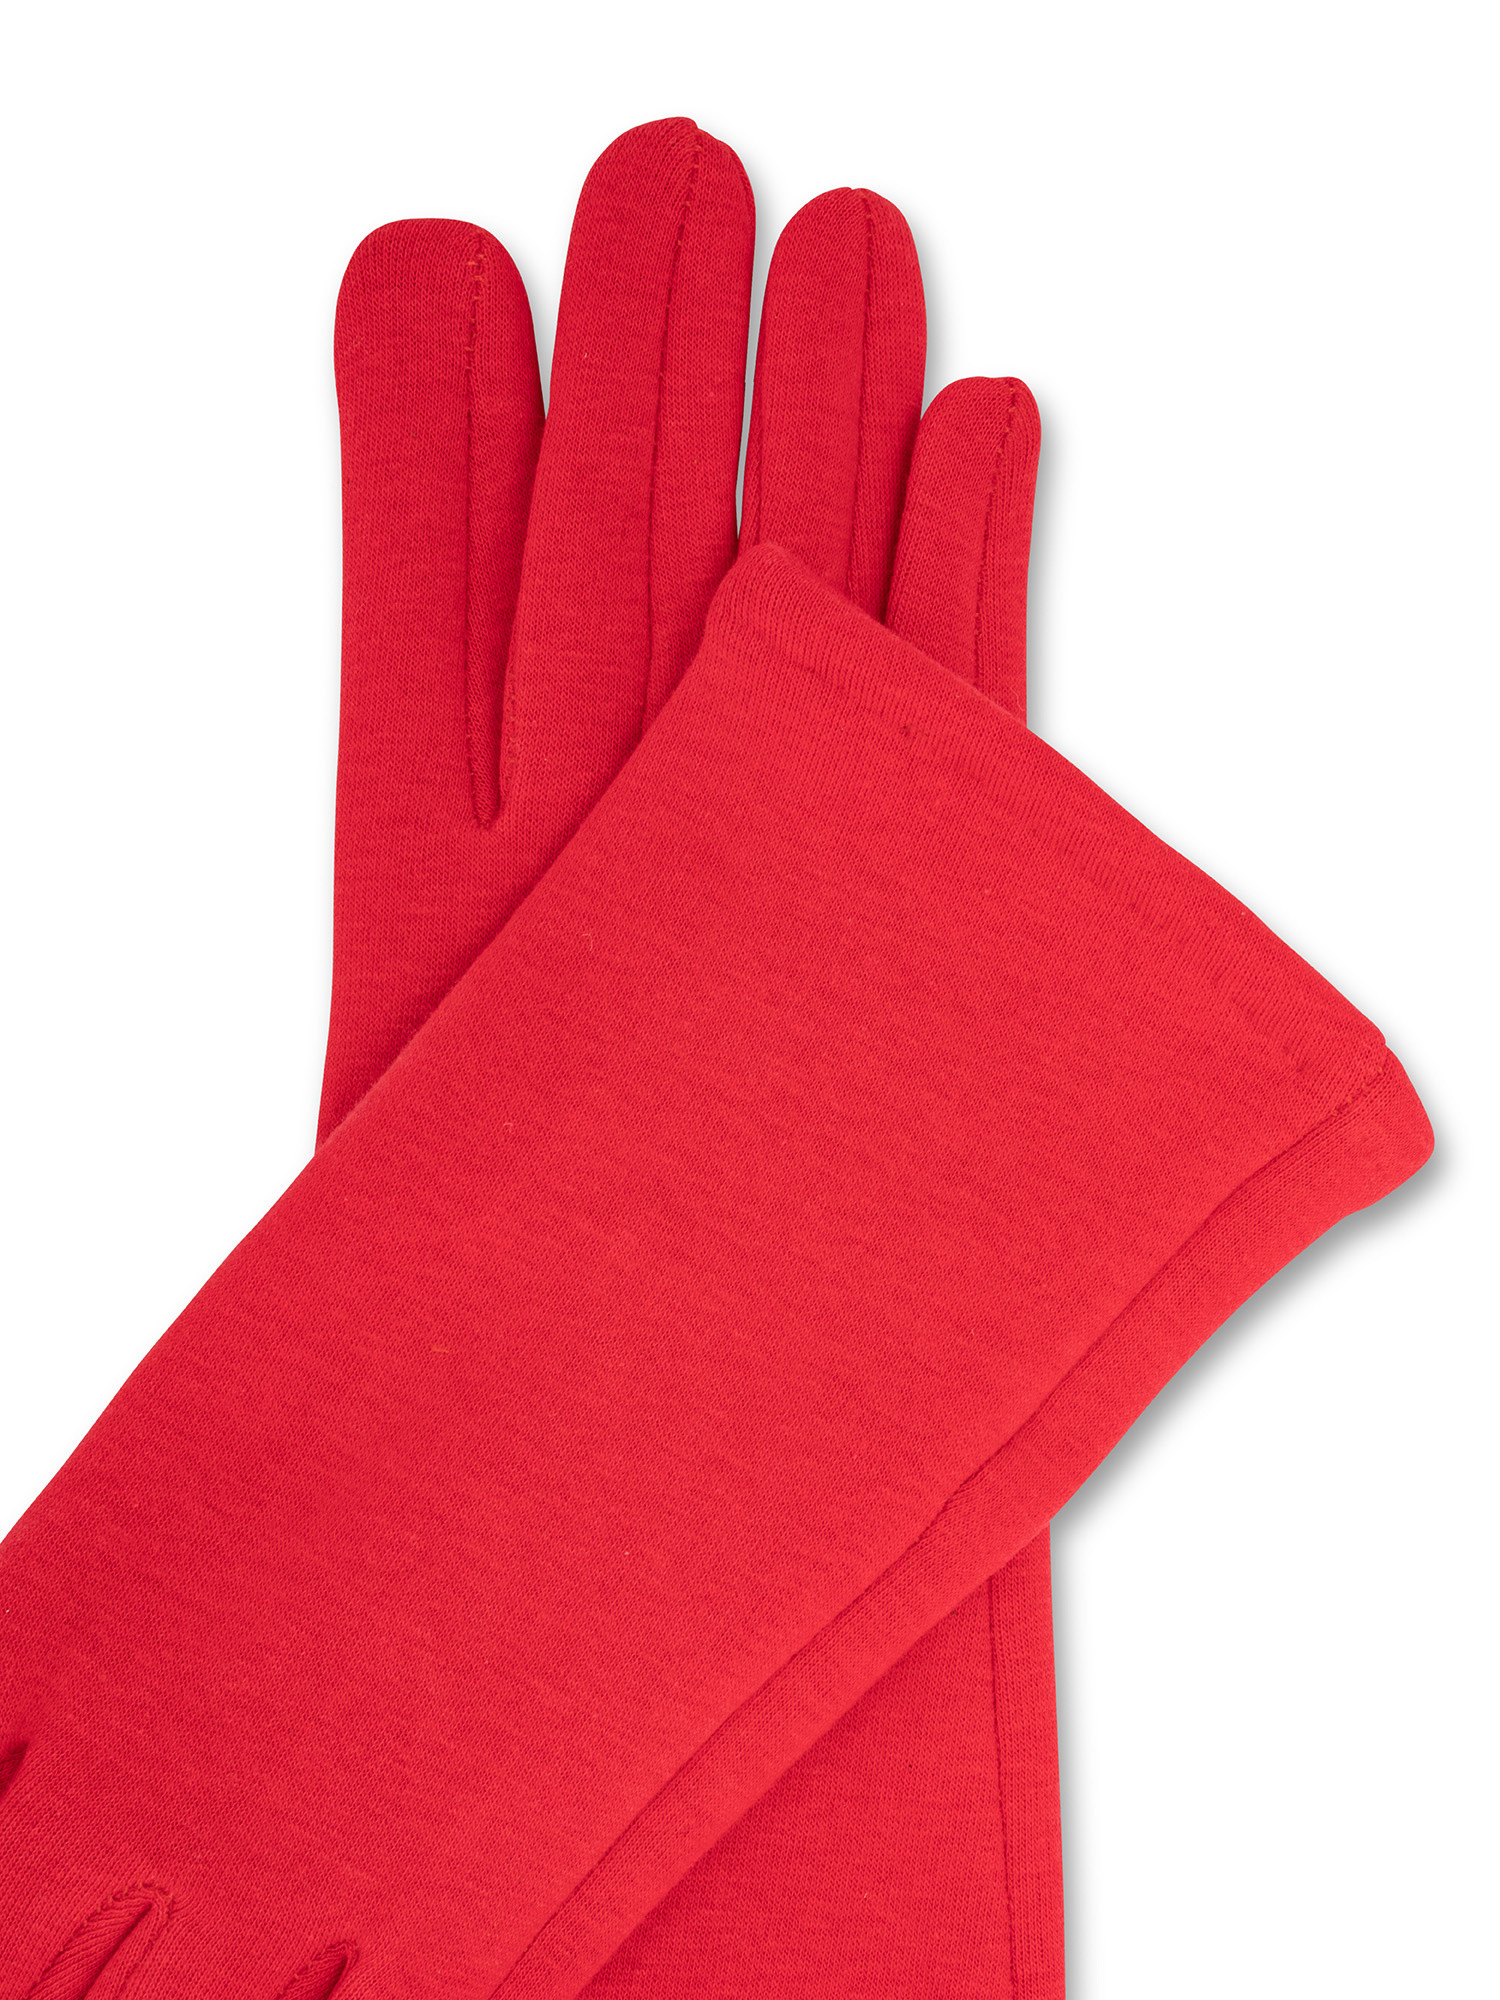 Koan - Jersey gloves, Red, large image number 1